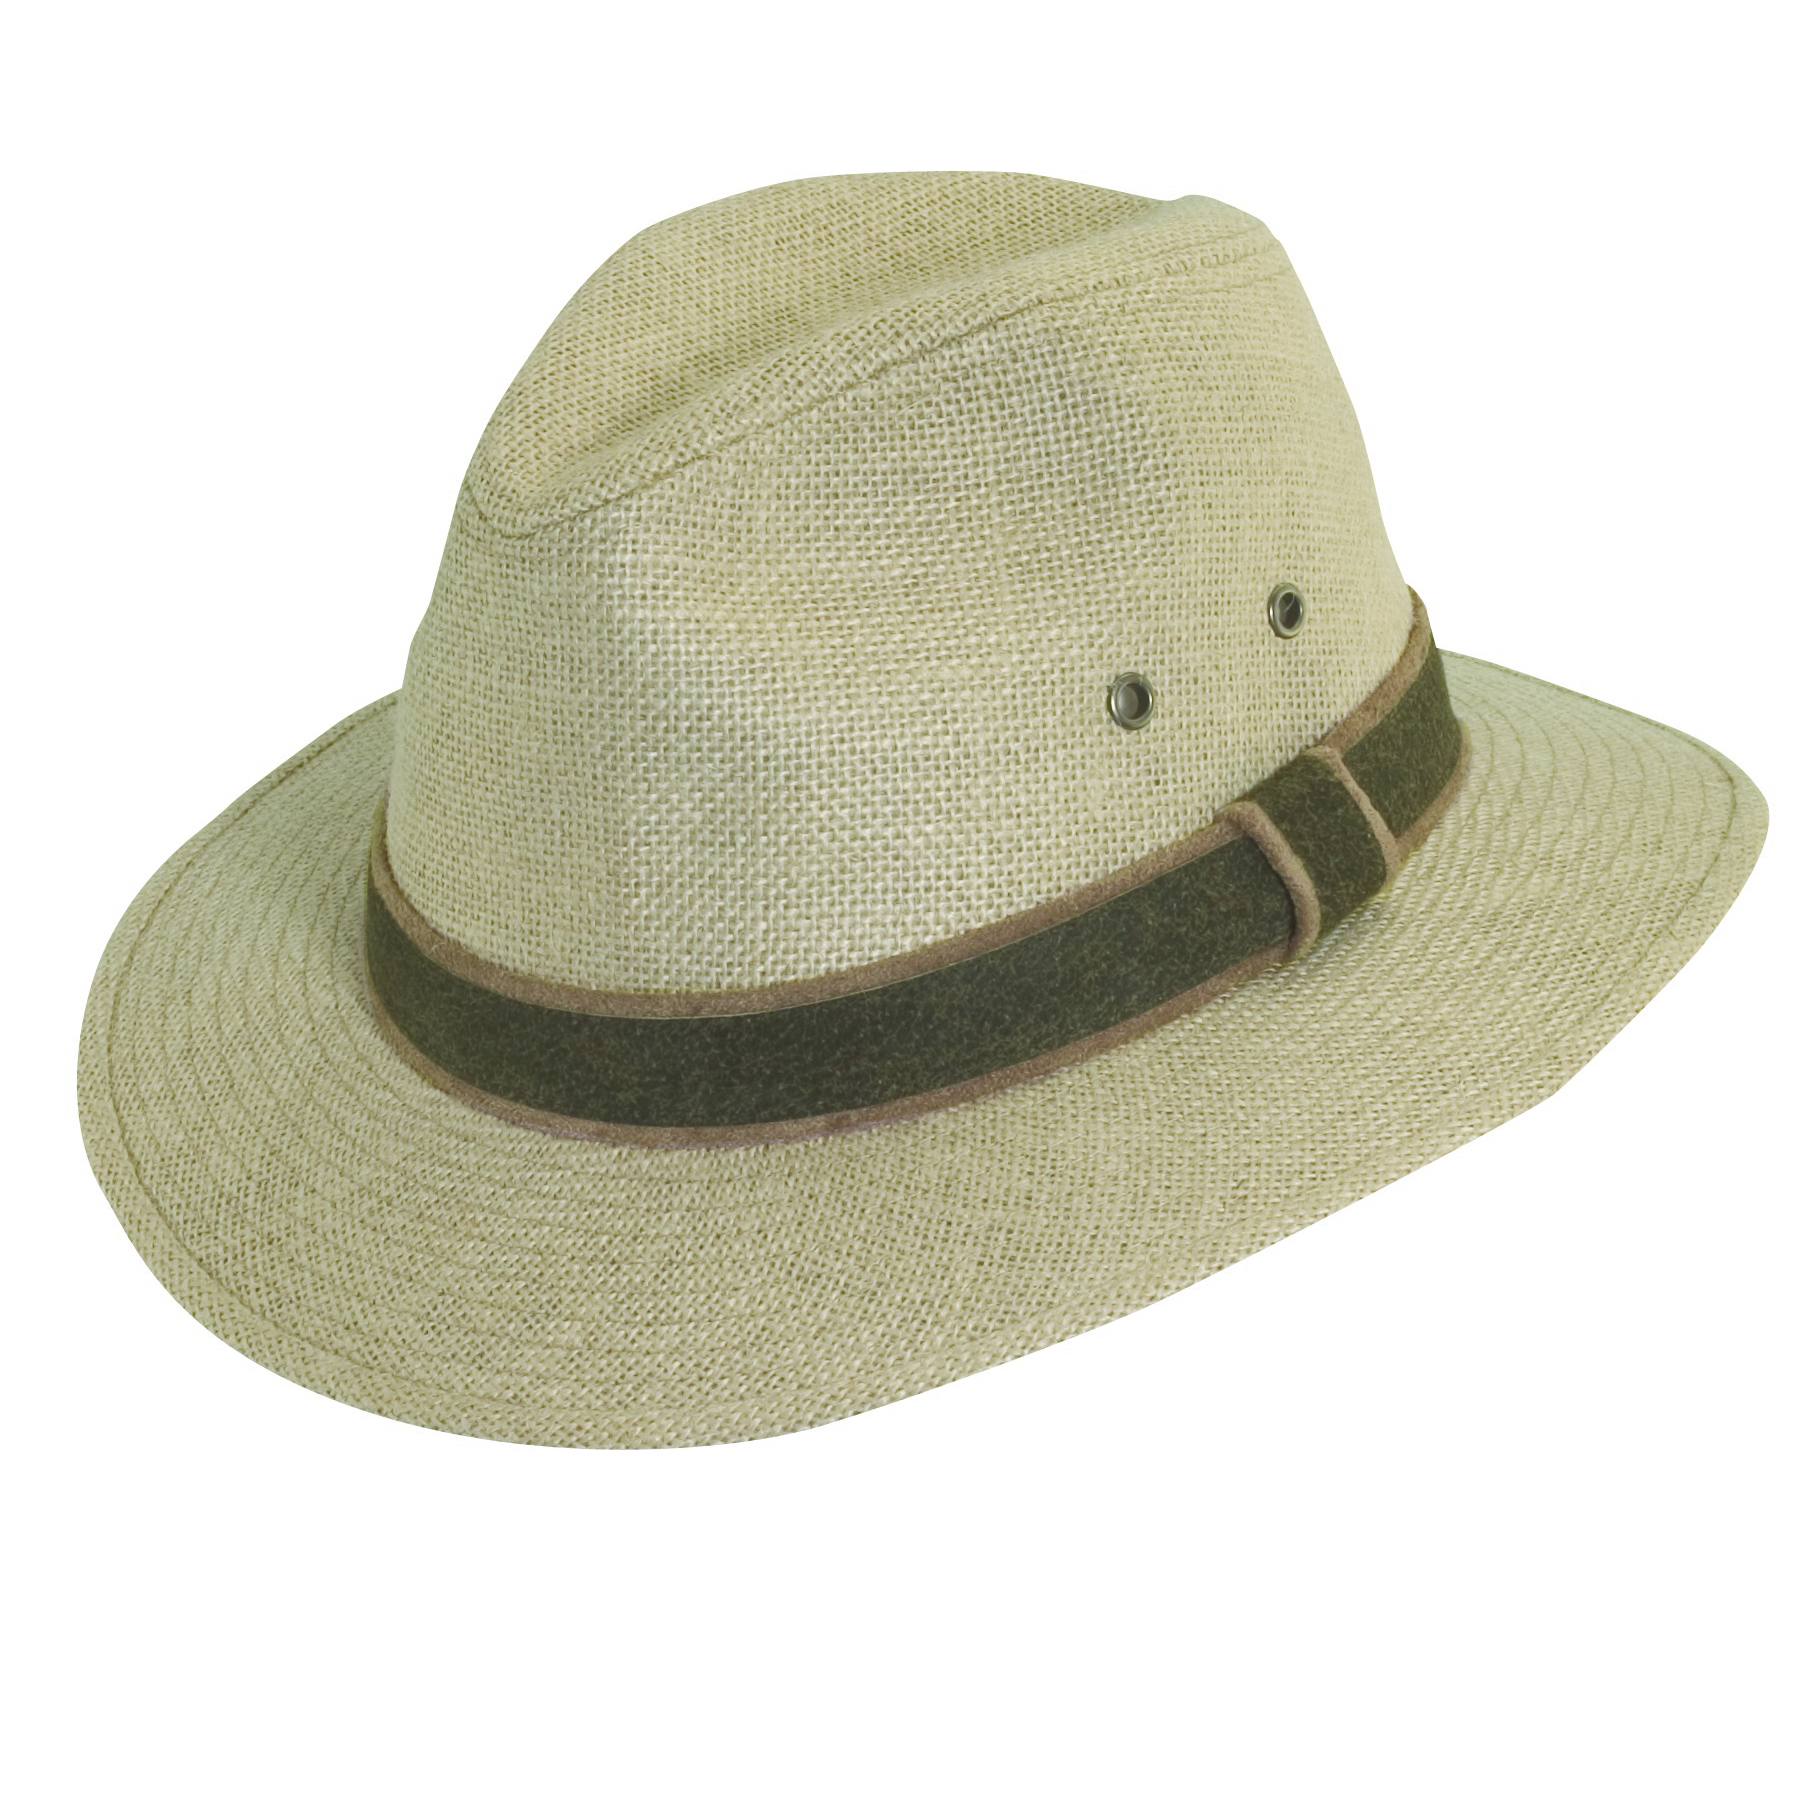 safari hat women